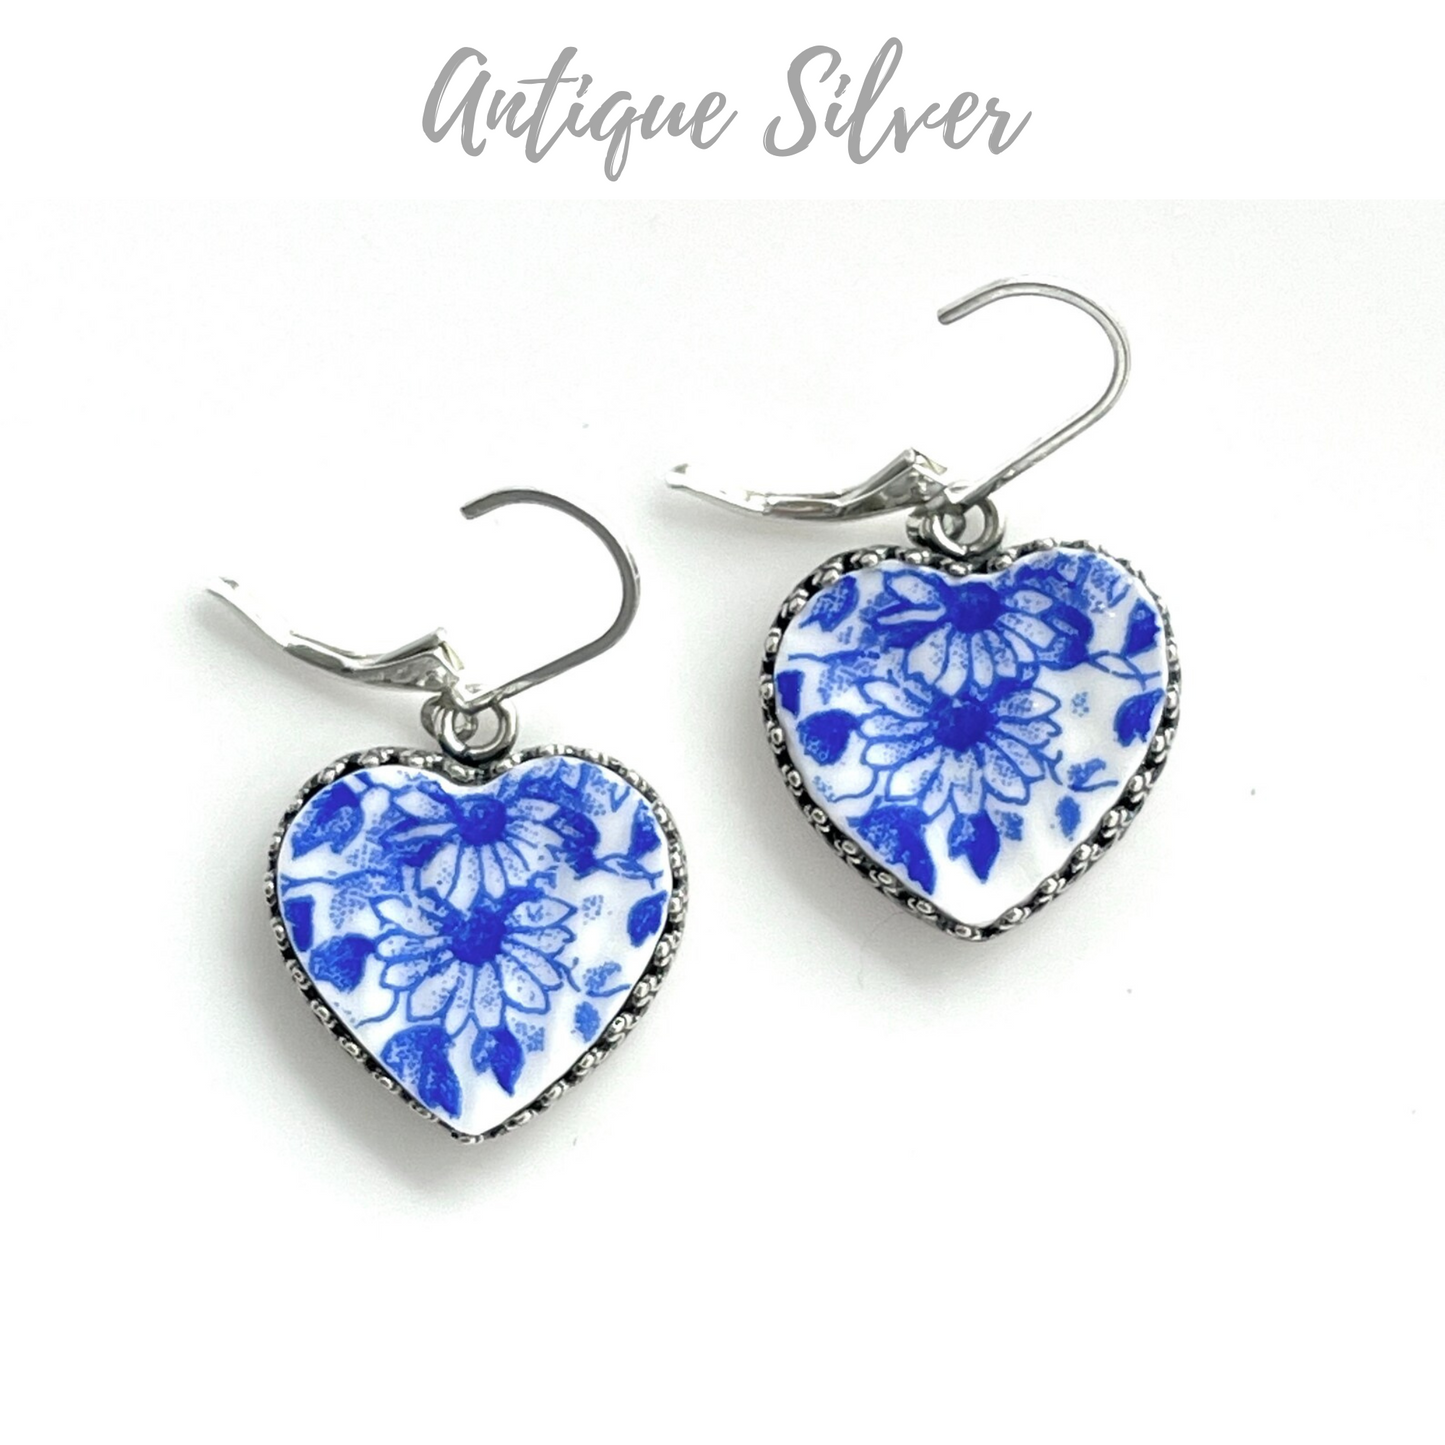 Blue and White Heart Earrings